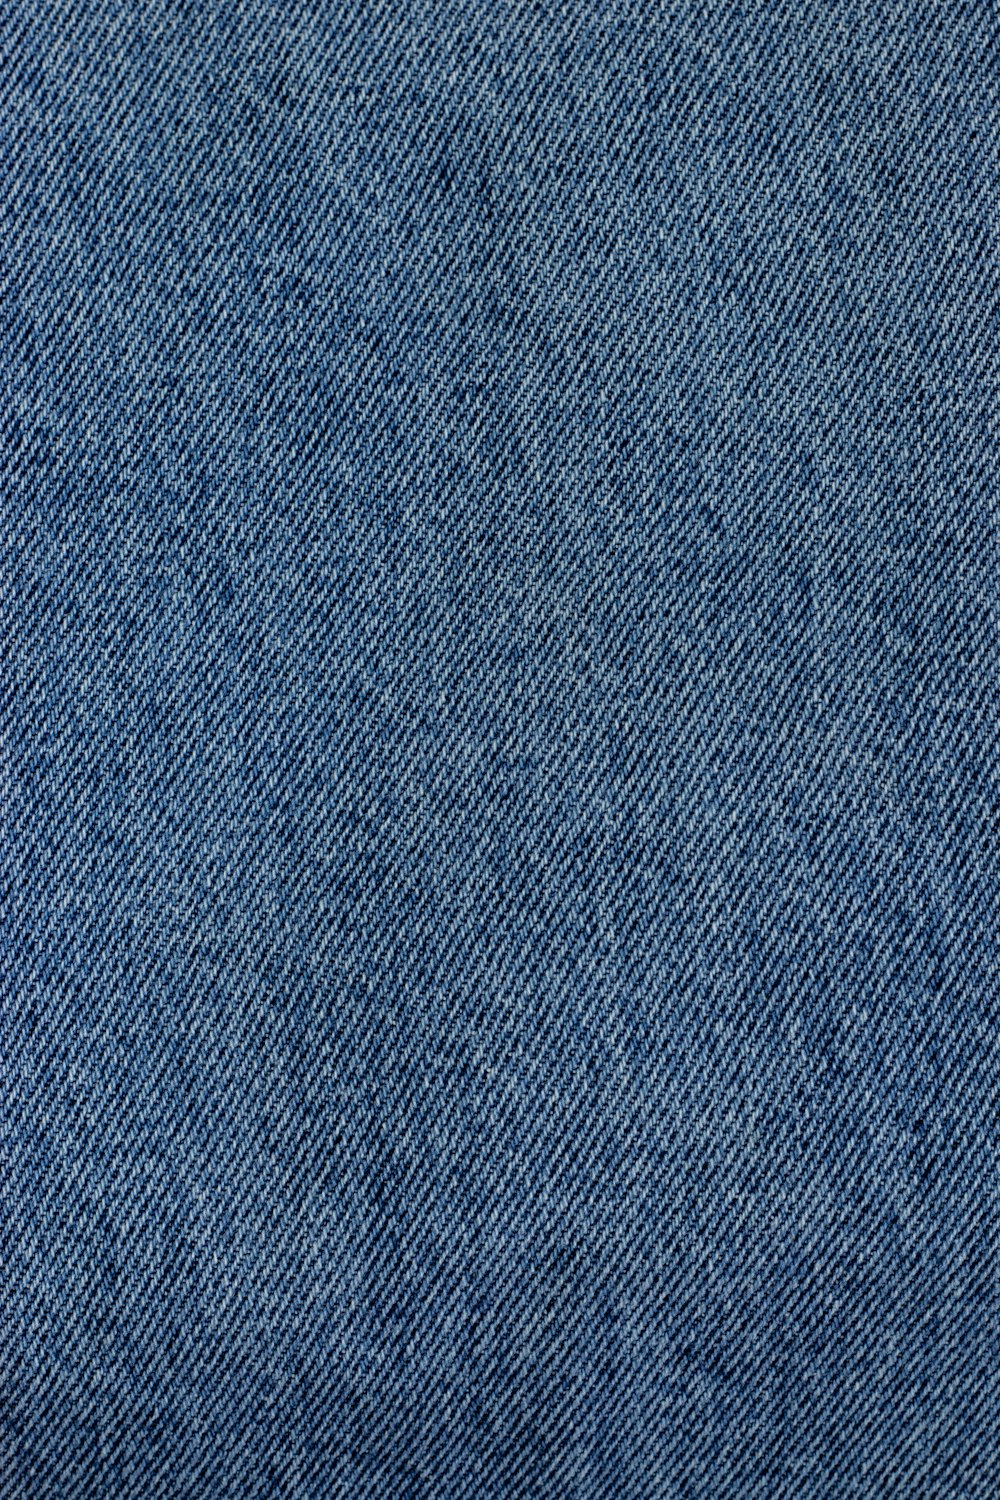 A close up of a blue jean fabric photo – Free Denim Image on Unsplash